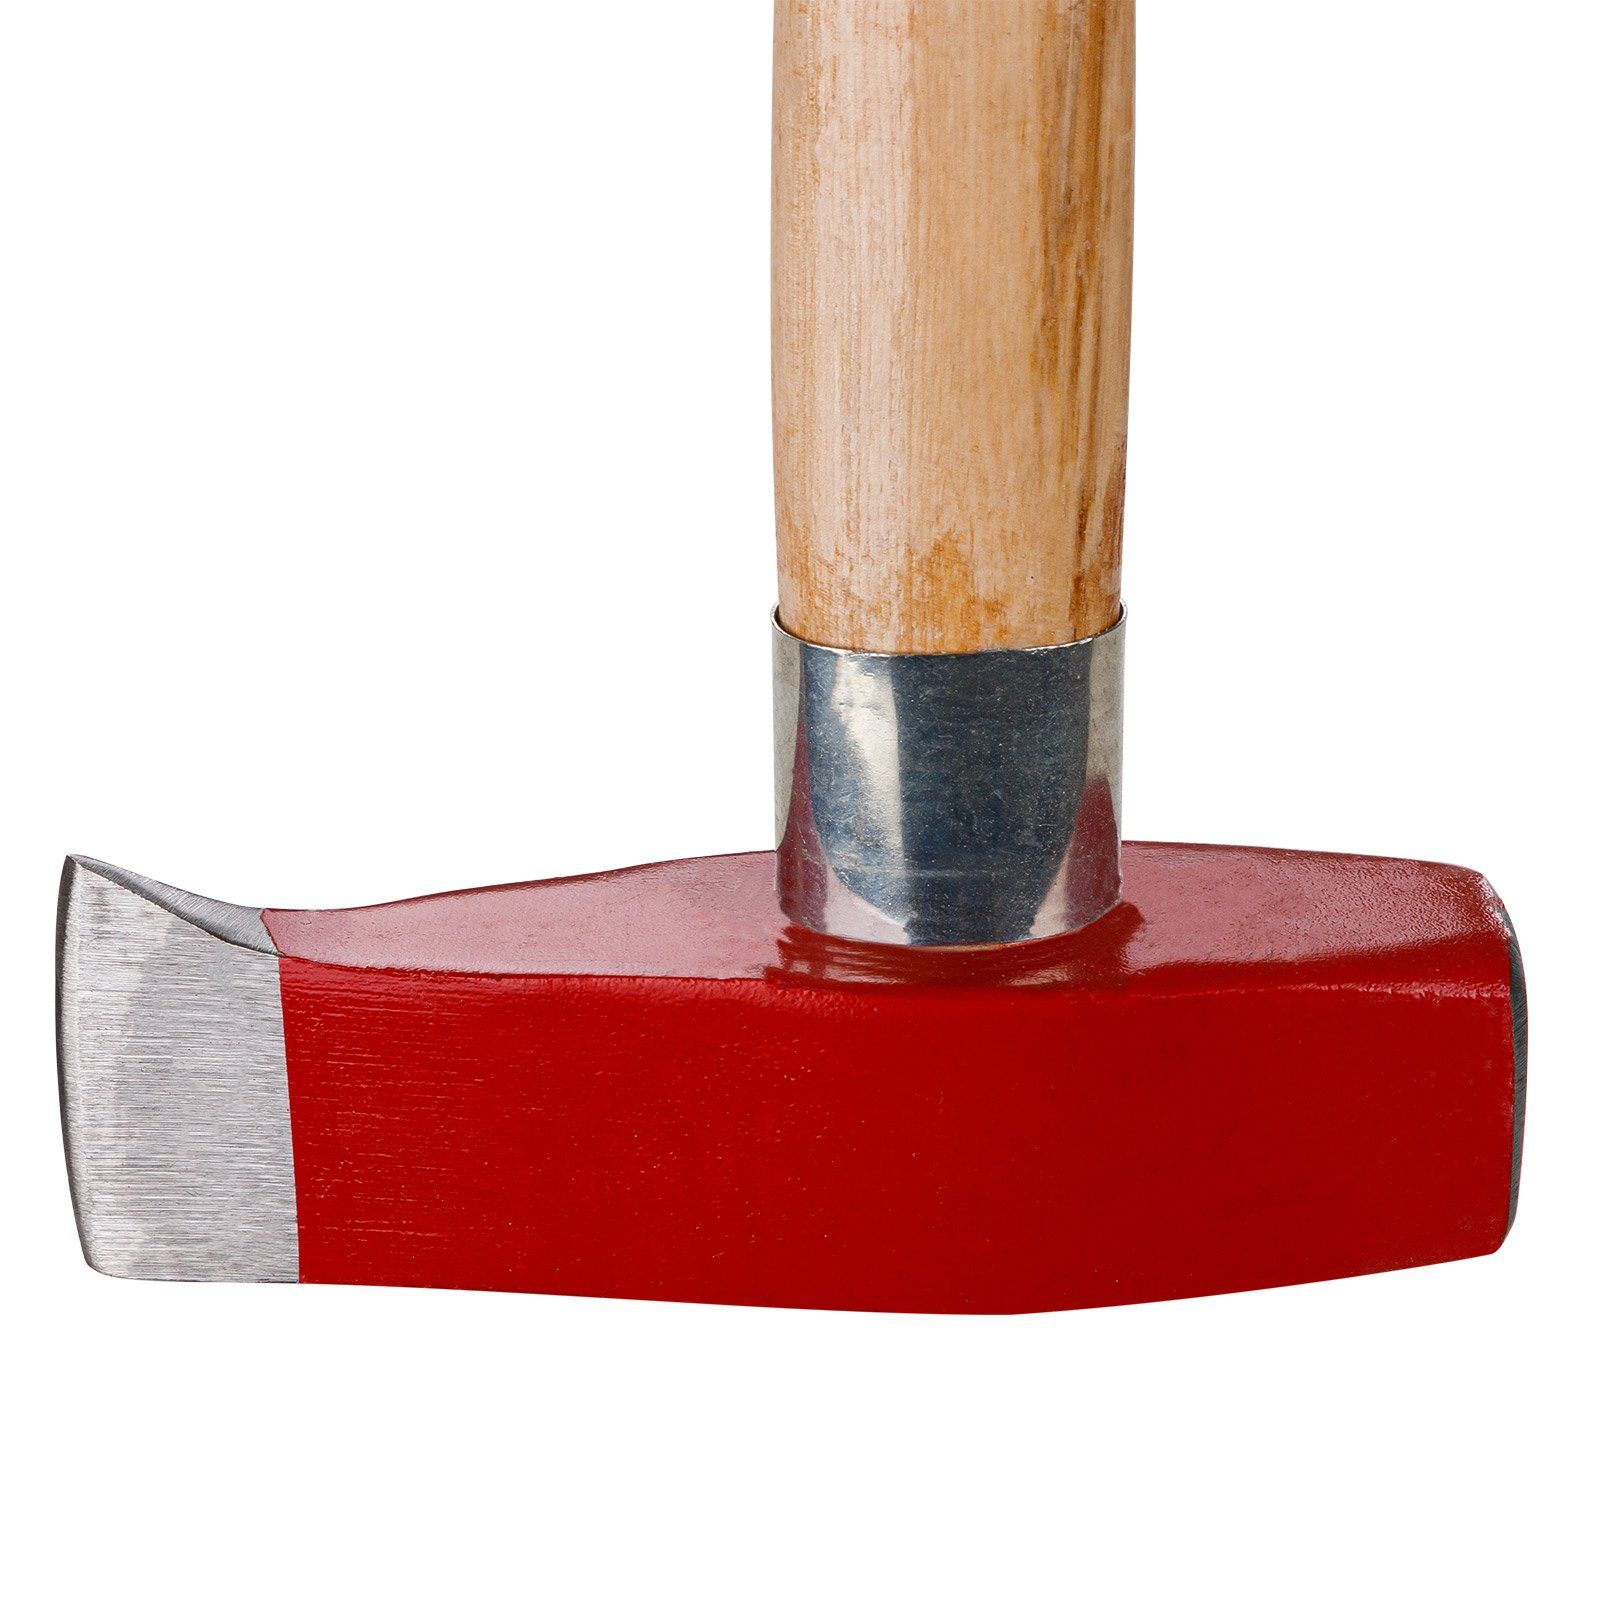 DEMA 3kg / Spaltaxt Spalthammer Hickory Hammer